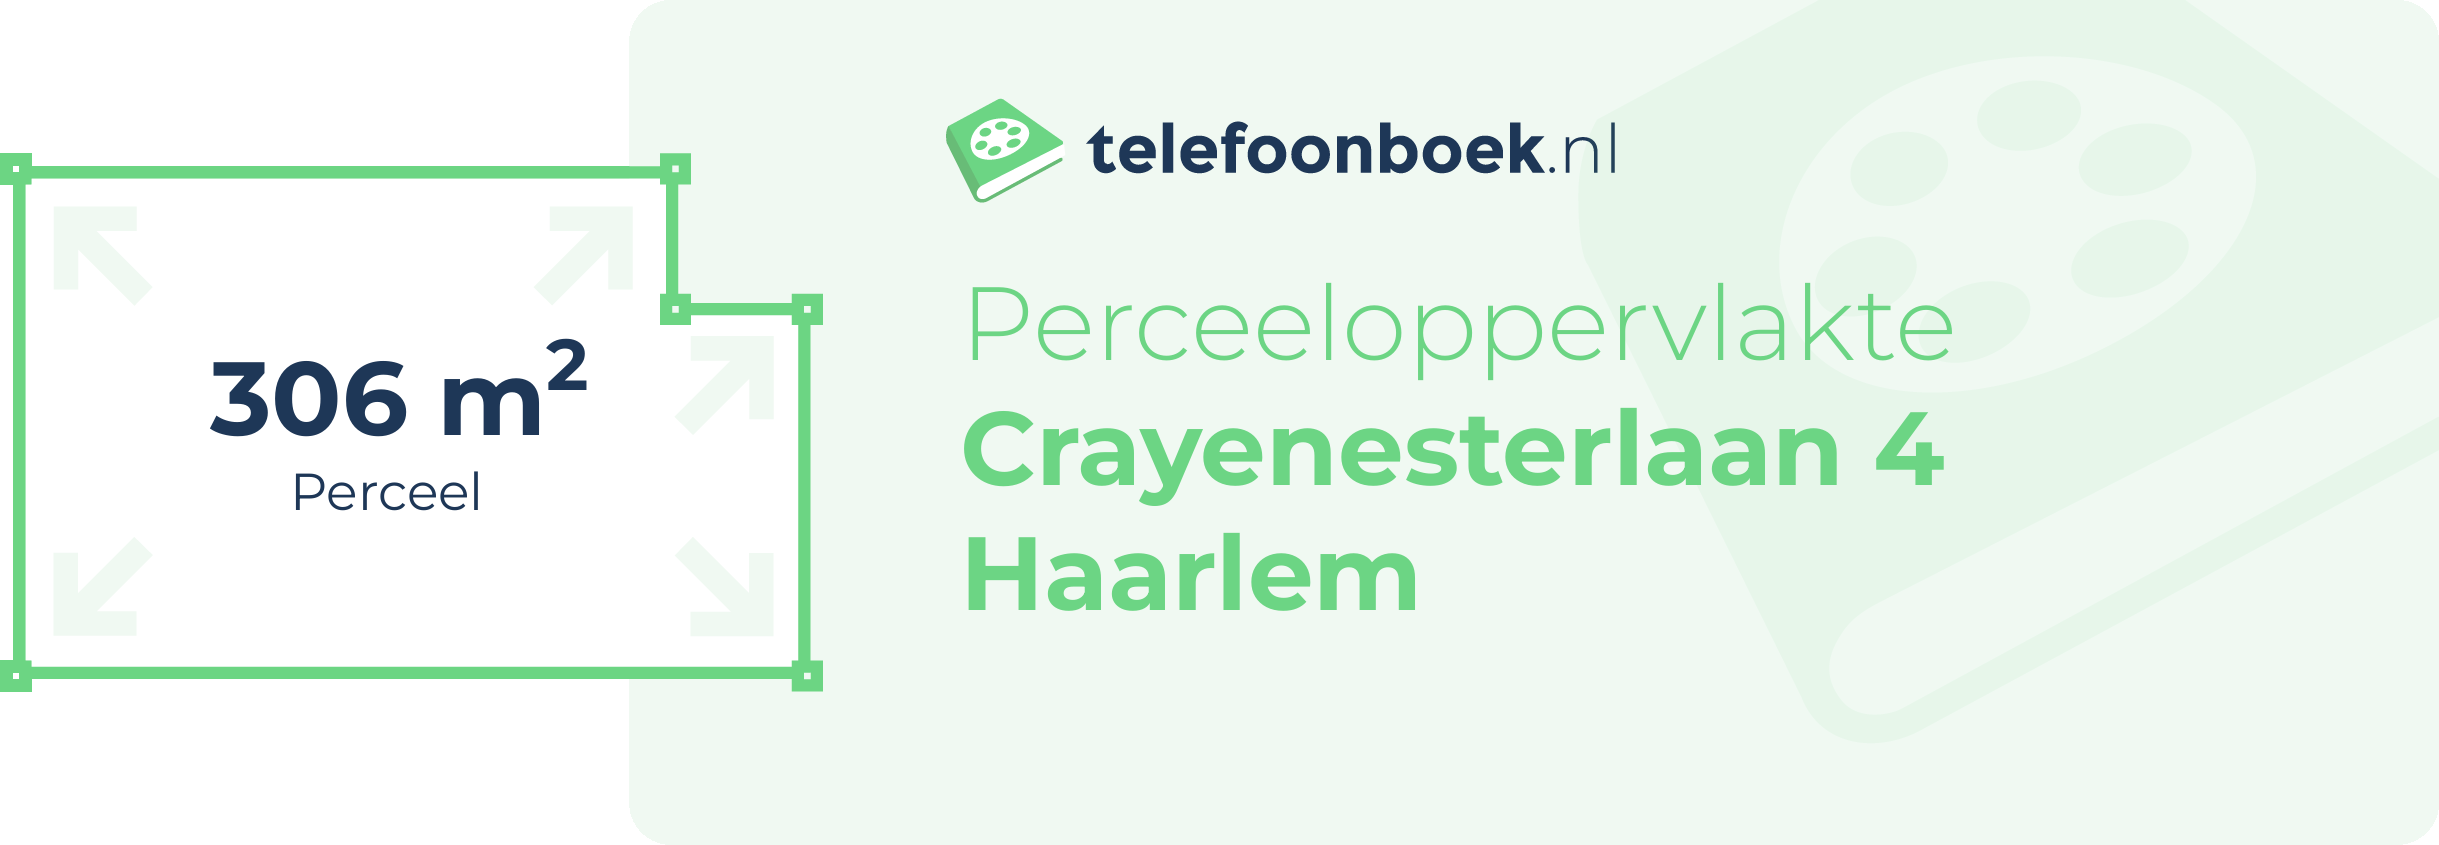 Perceeloppervlakte Crayenesterlaan 4 Haarlem